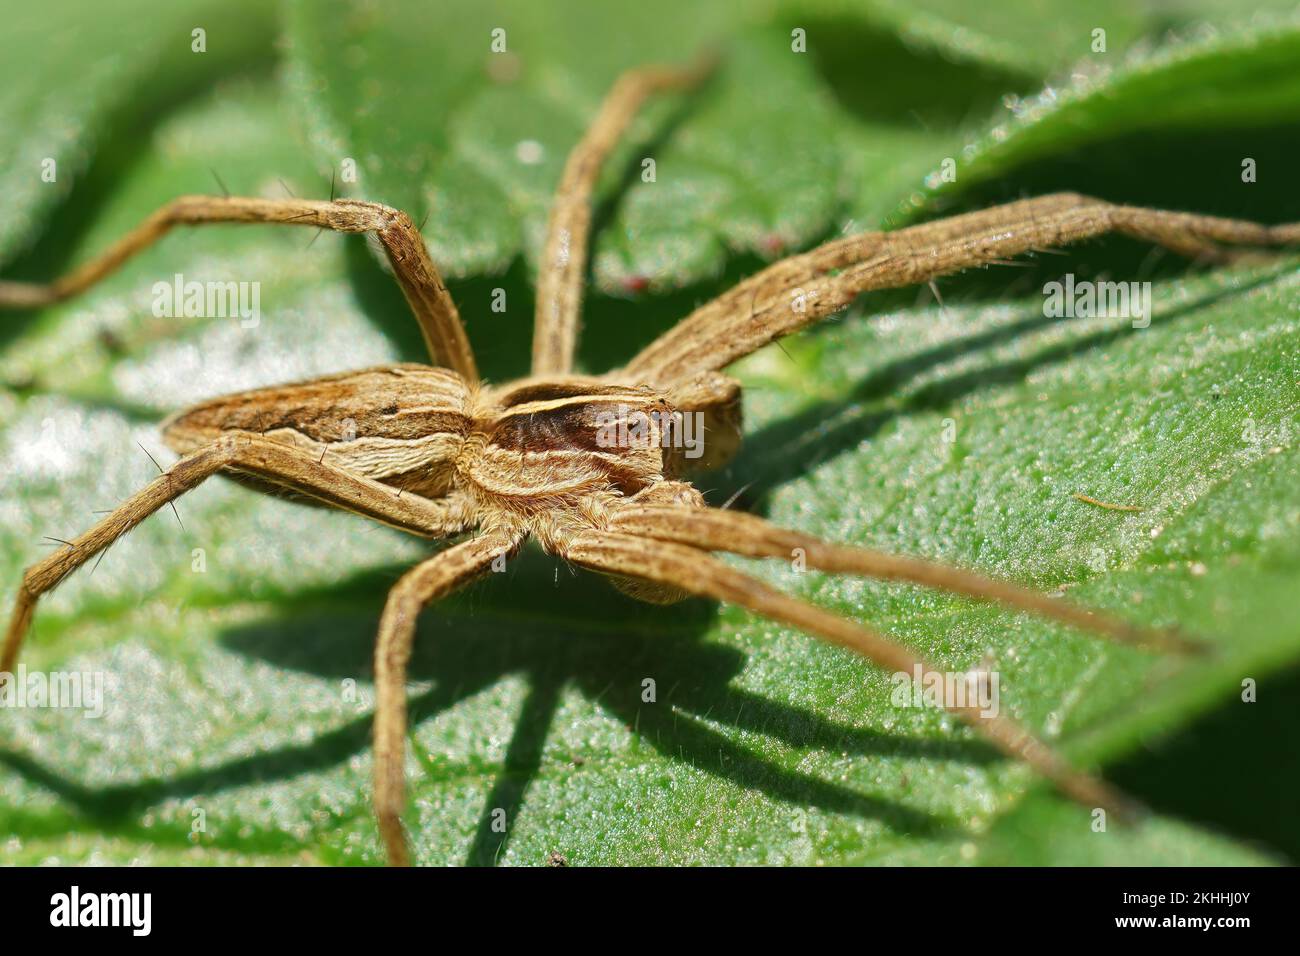 Natural closeup shot of a sunbathing Nursery web spider, Pisaura mirabilis, on a green leaf Stock Photo